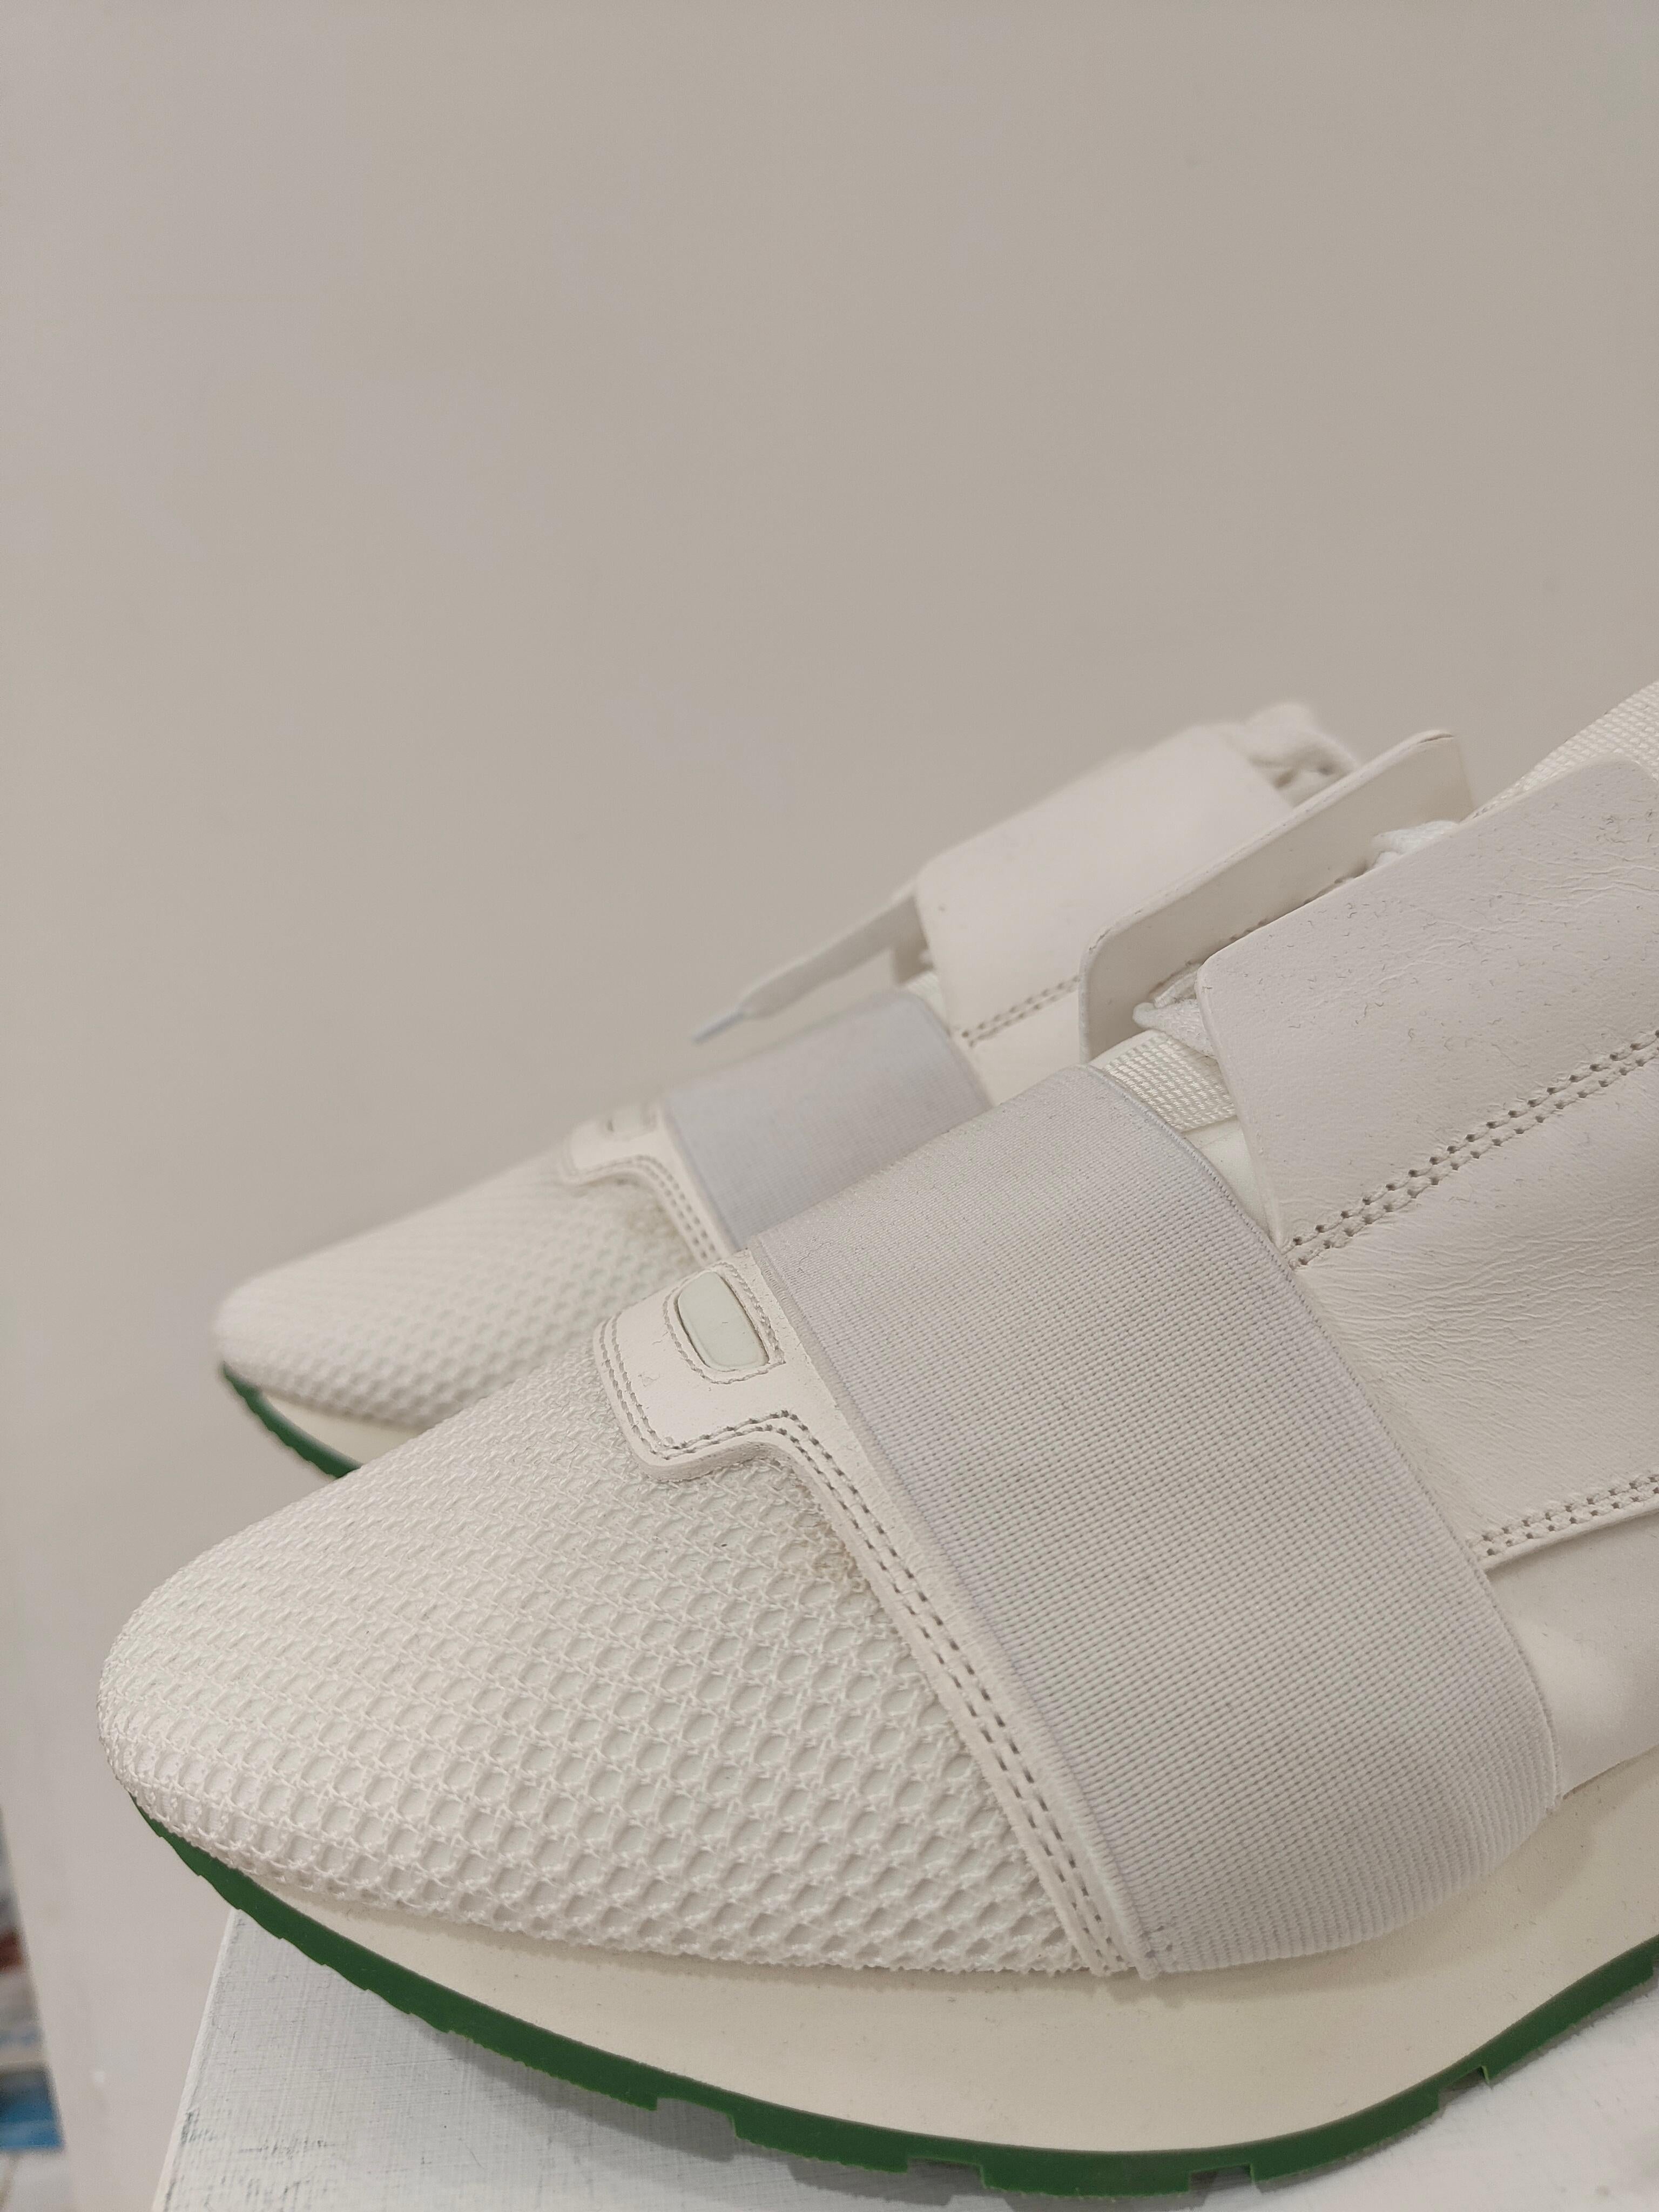 Balenciaga white green men's sneakers NWOT
size 41 it
still with box